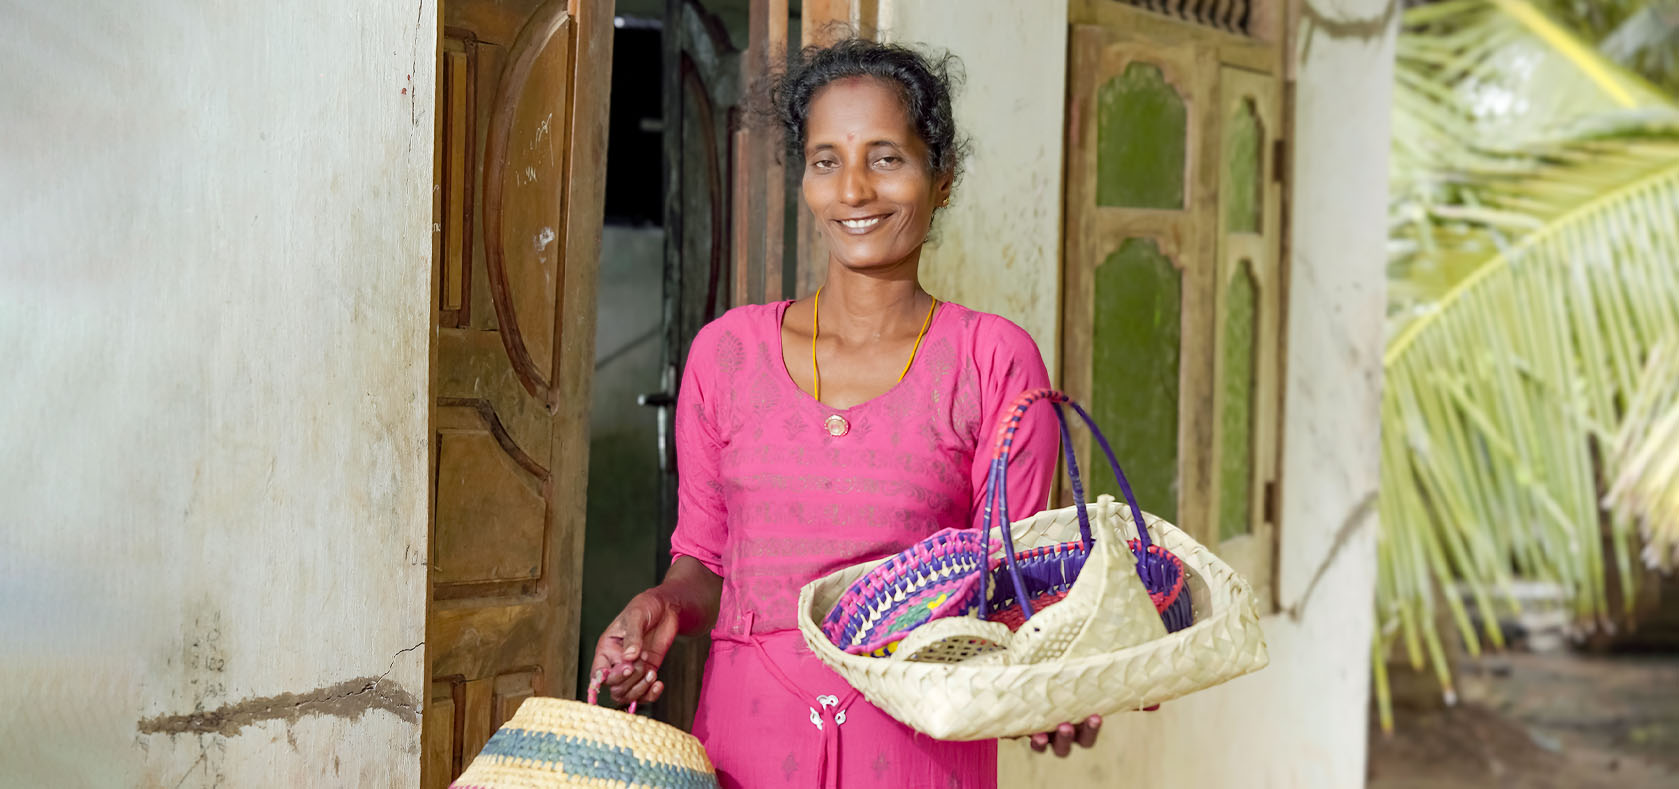 Gnanasegaram Rangithakaladevi holds her newly completed weaving products. Photo: UN Women Sri Lanka/Raveendra Rohana